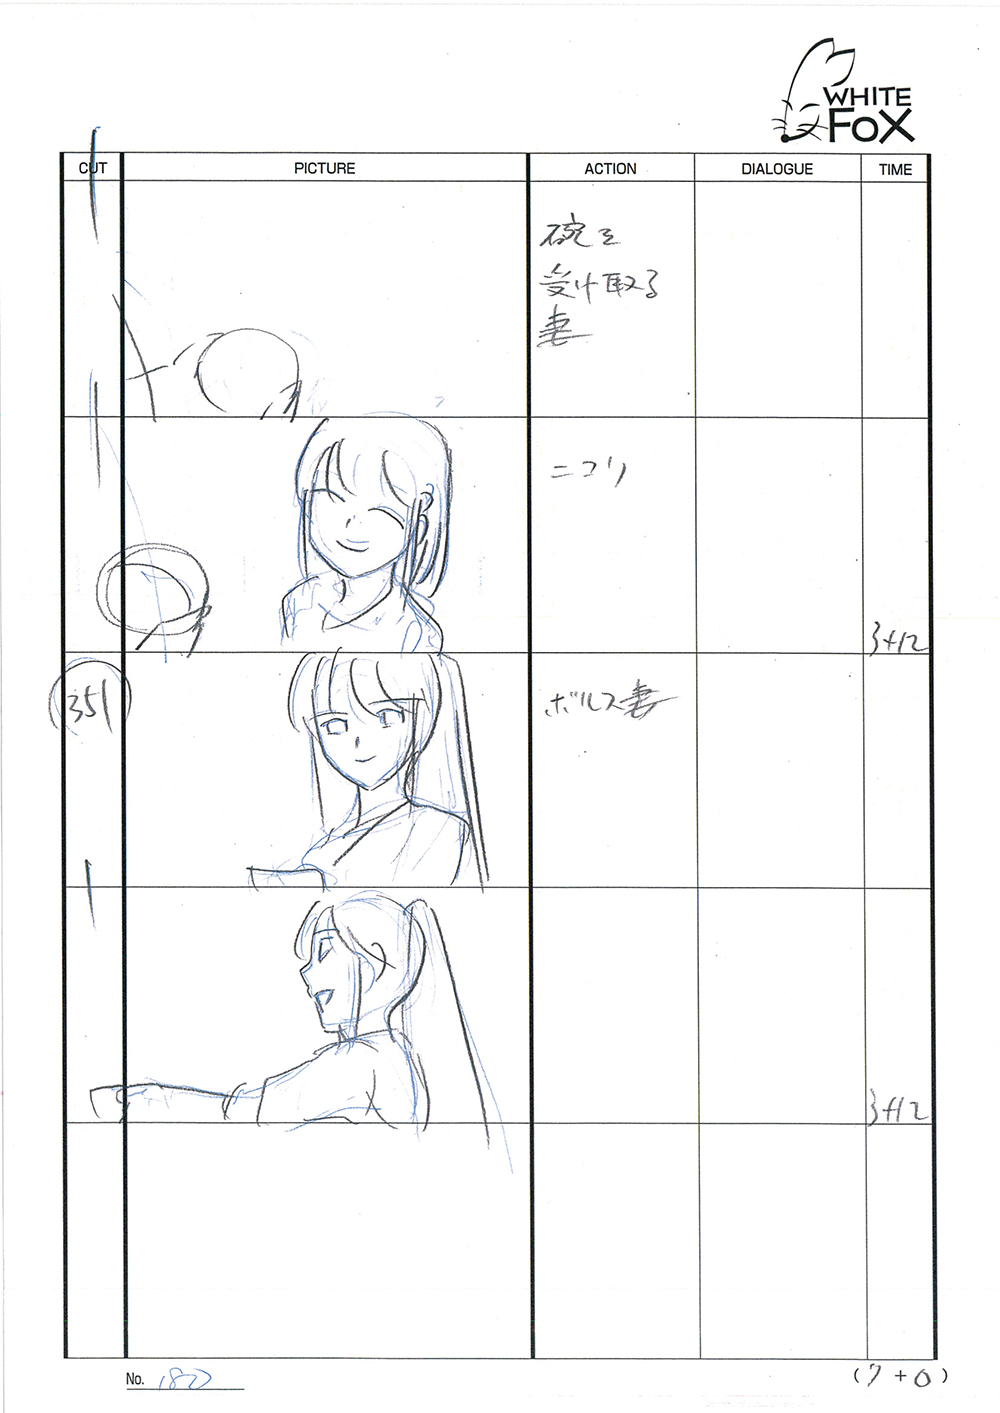 Akame ga Kill Episode 24 Storyboard Leak 185